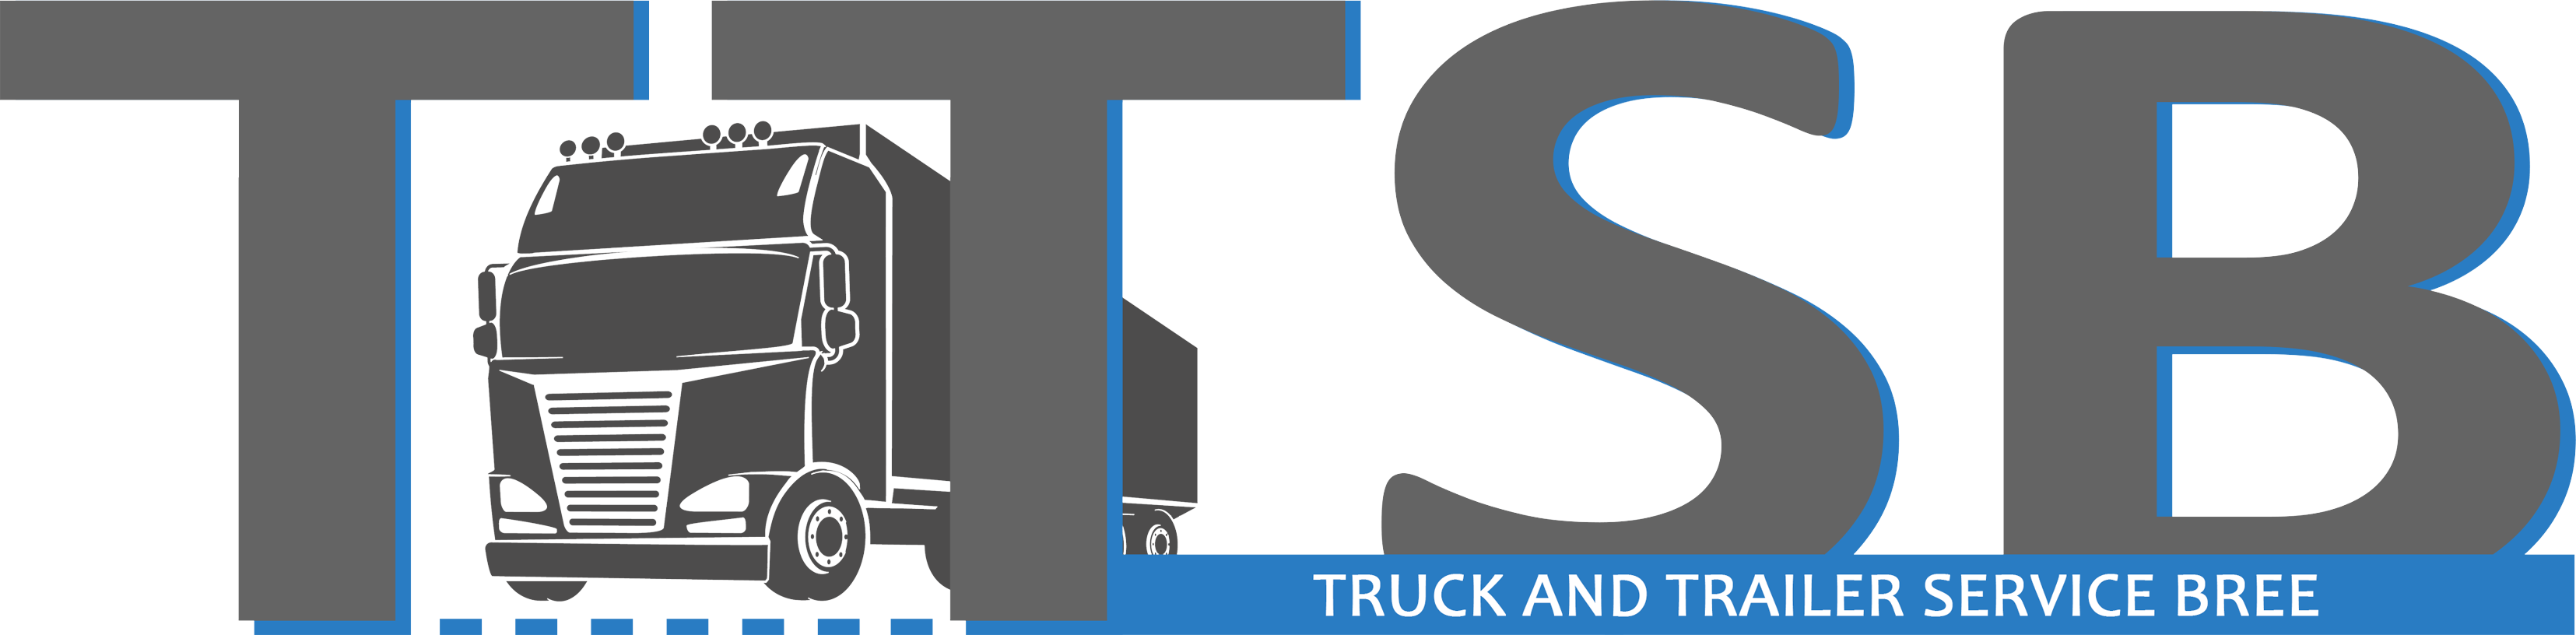 TTSB logo